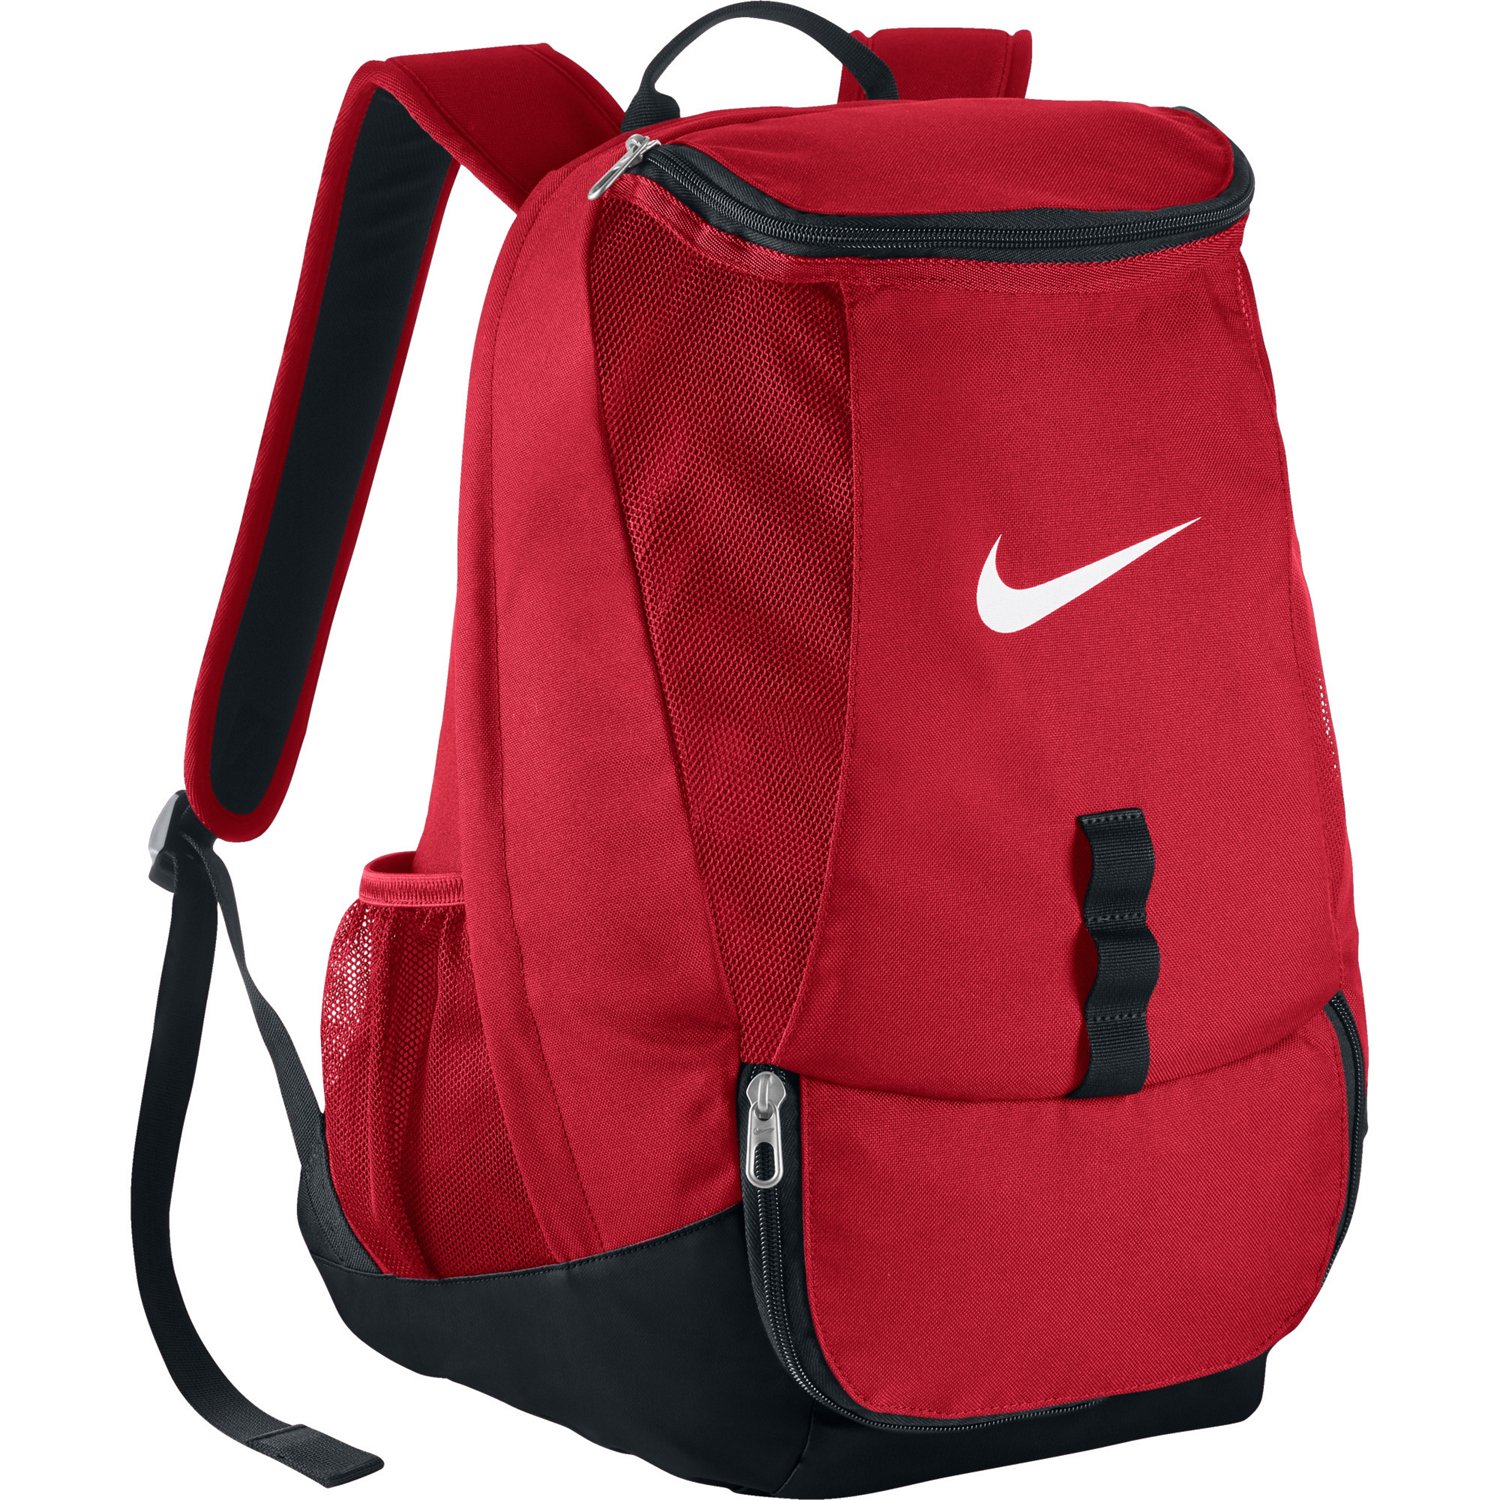 Soccer Bags | Soccer Backpacks, Soccer Duffel Bags | Academy